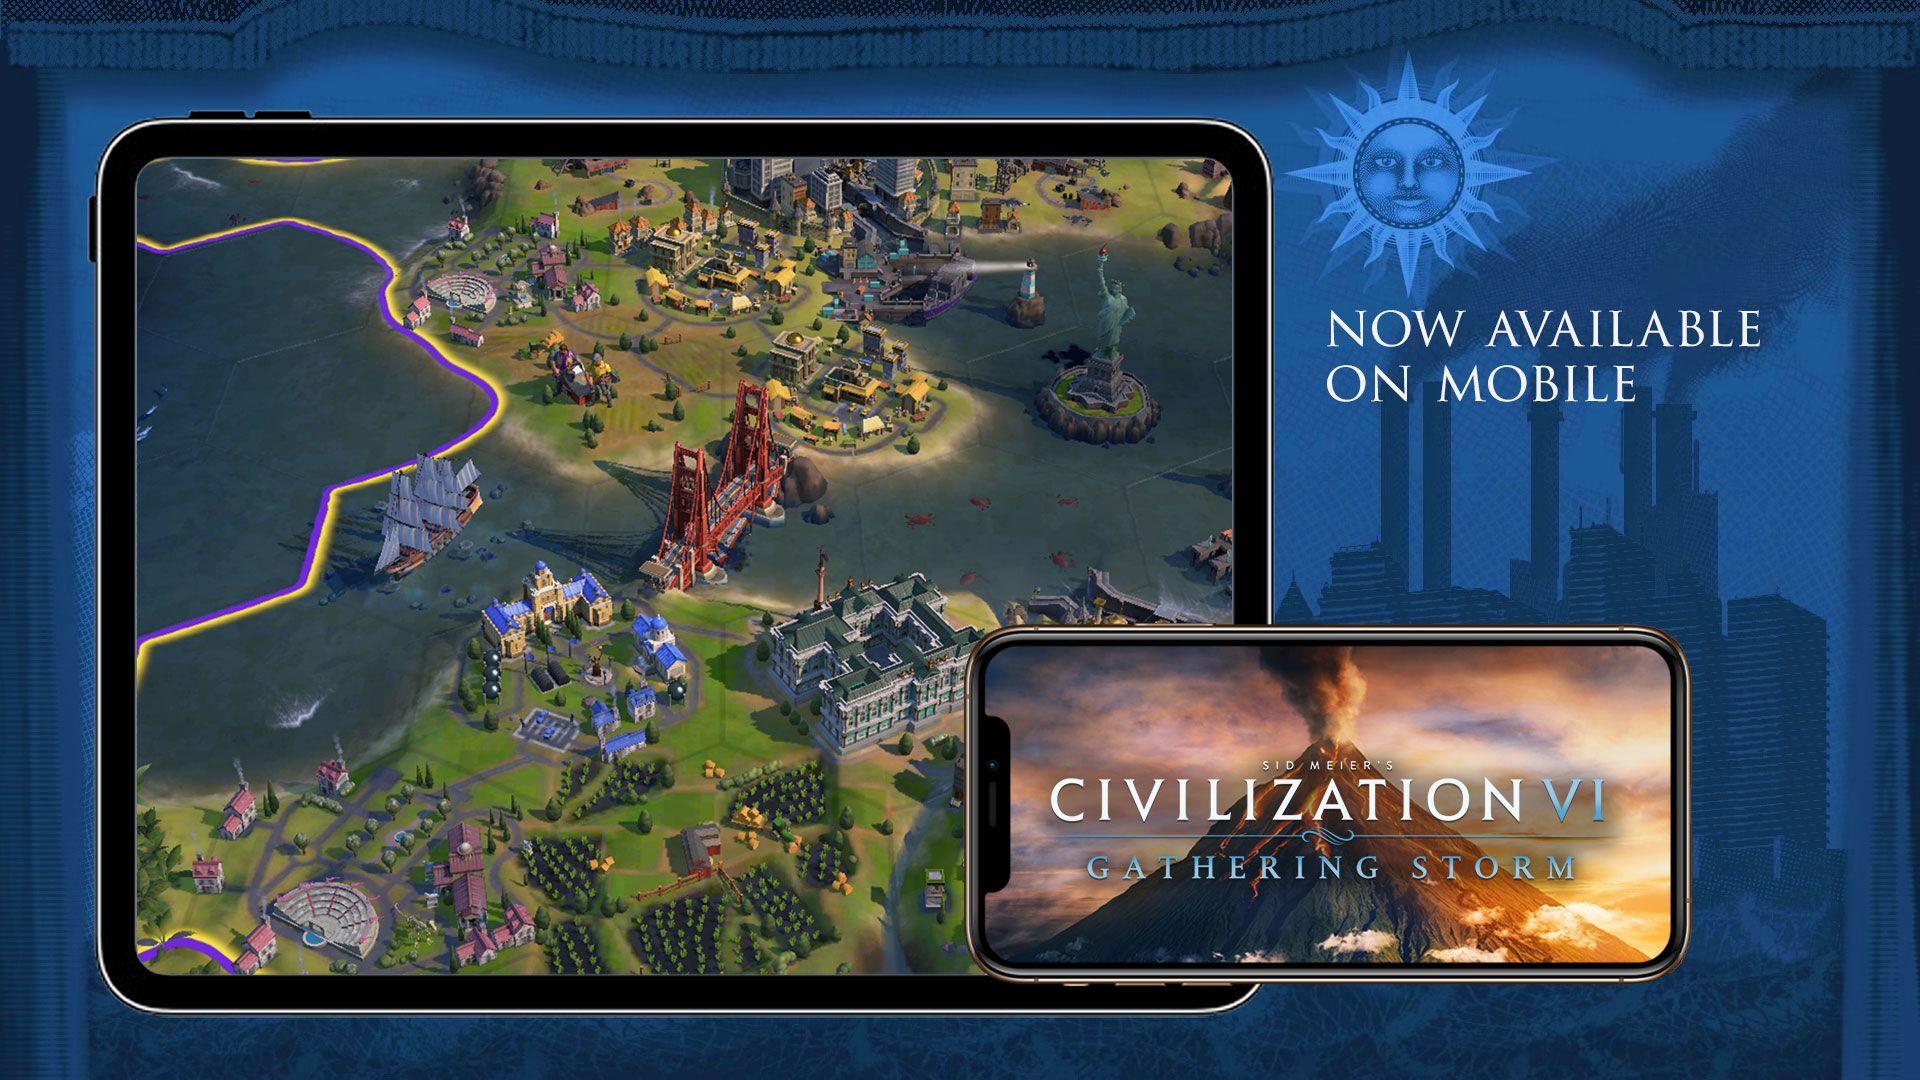 is civilization 6 multiplayer?